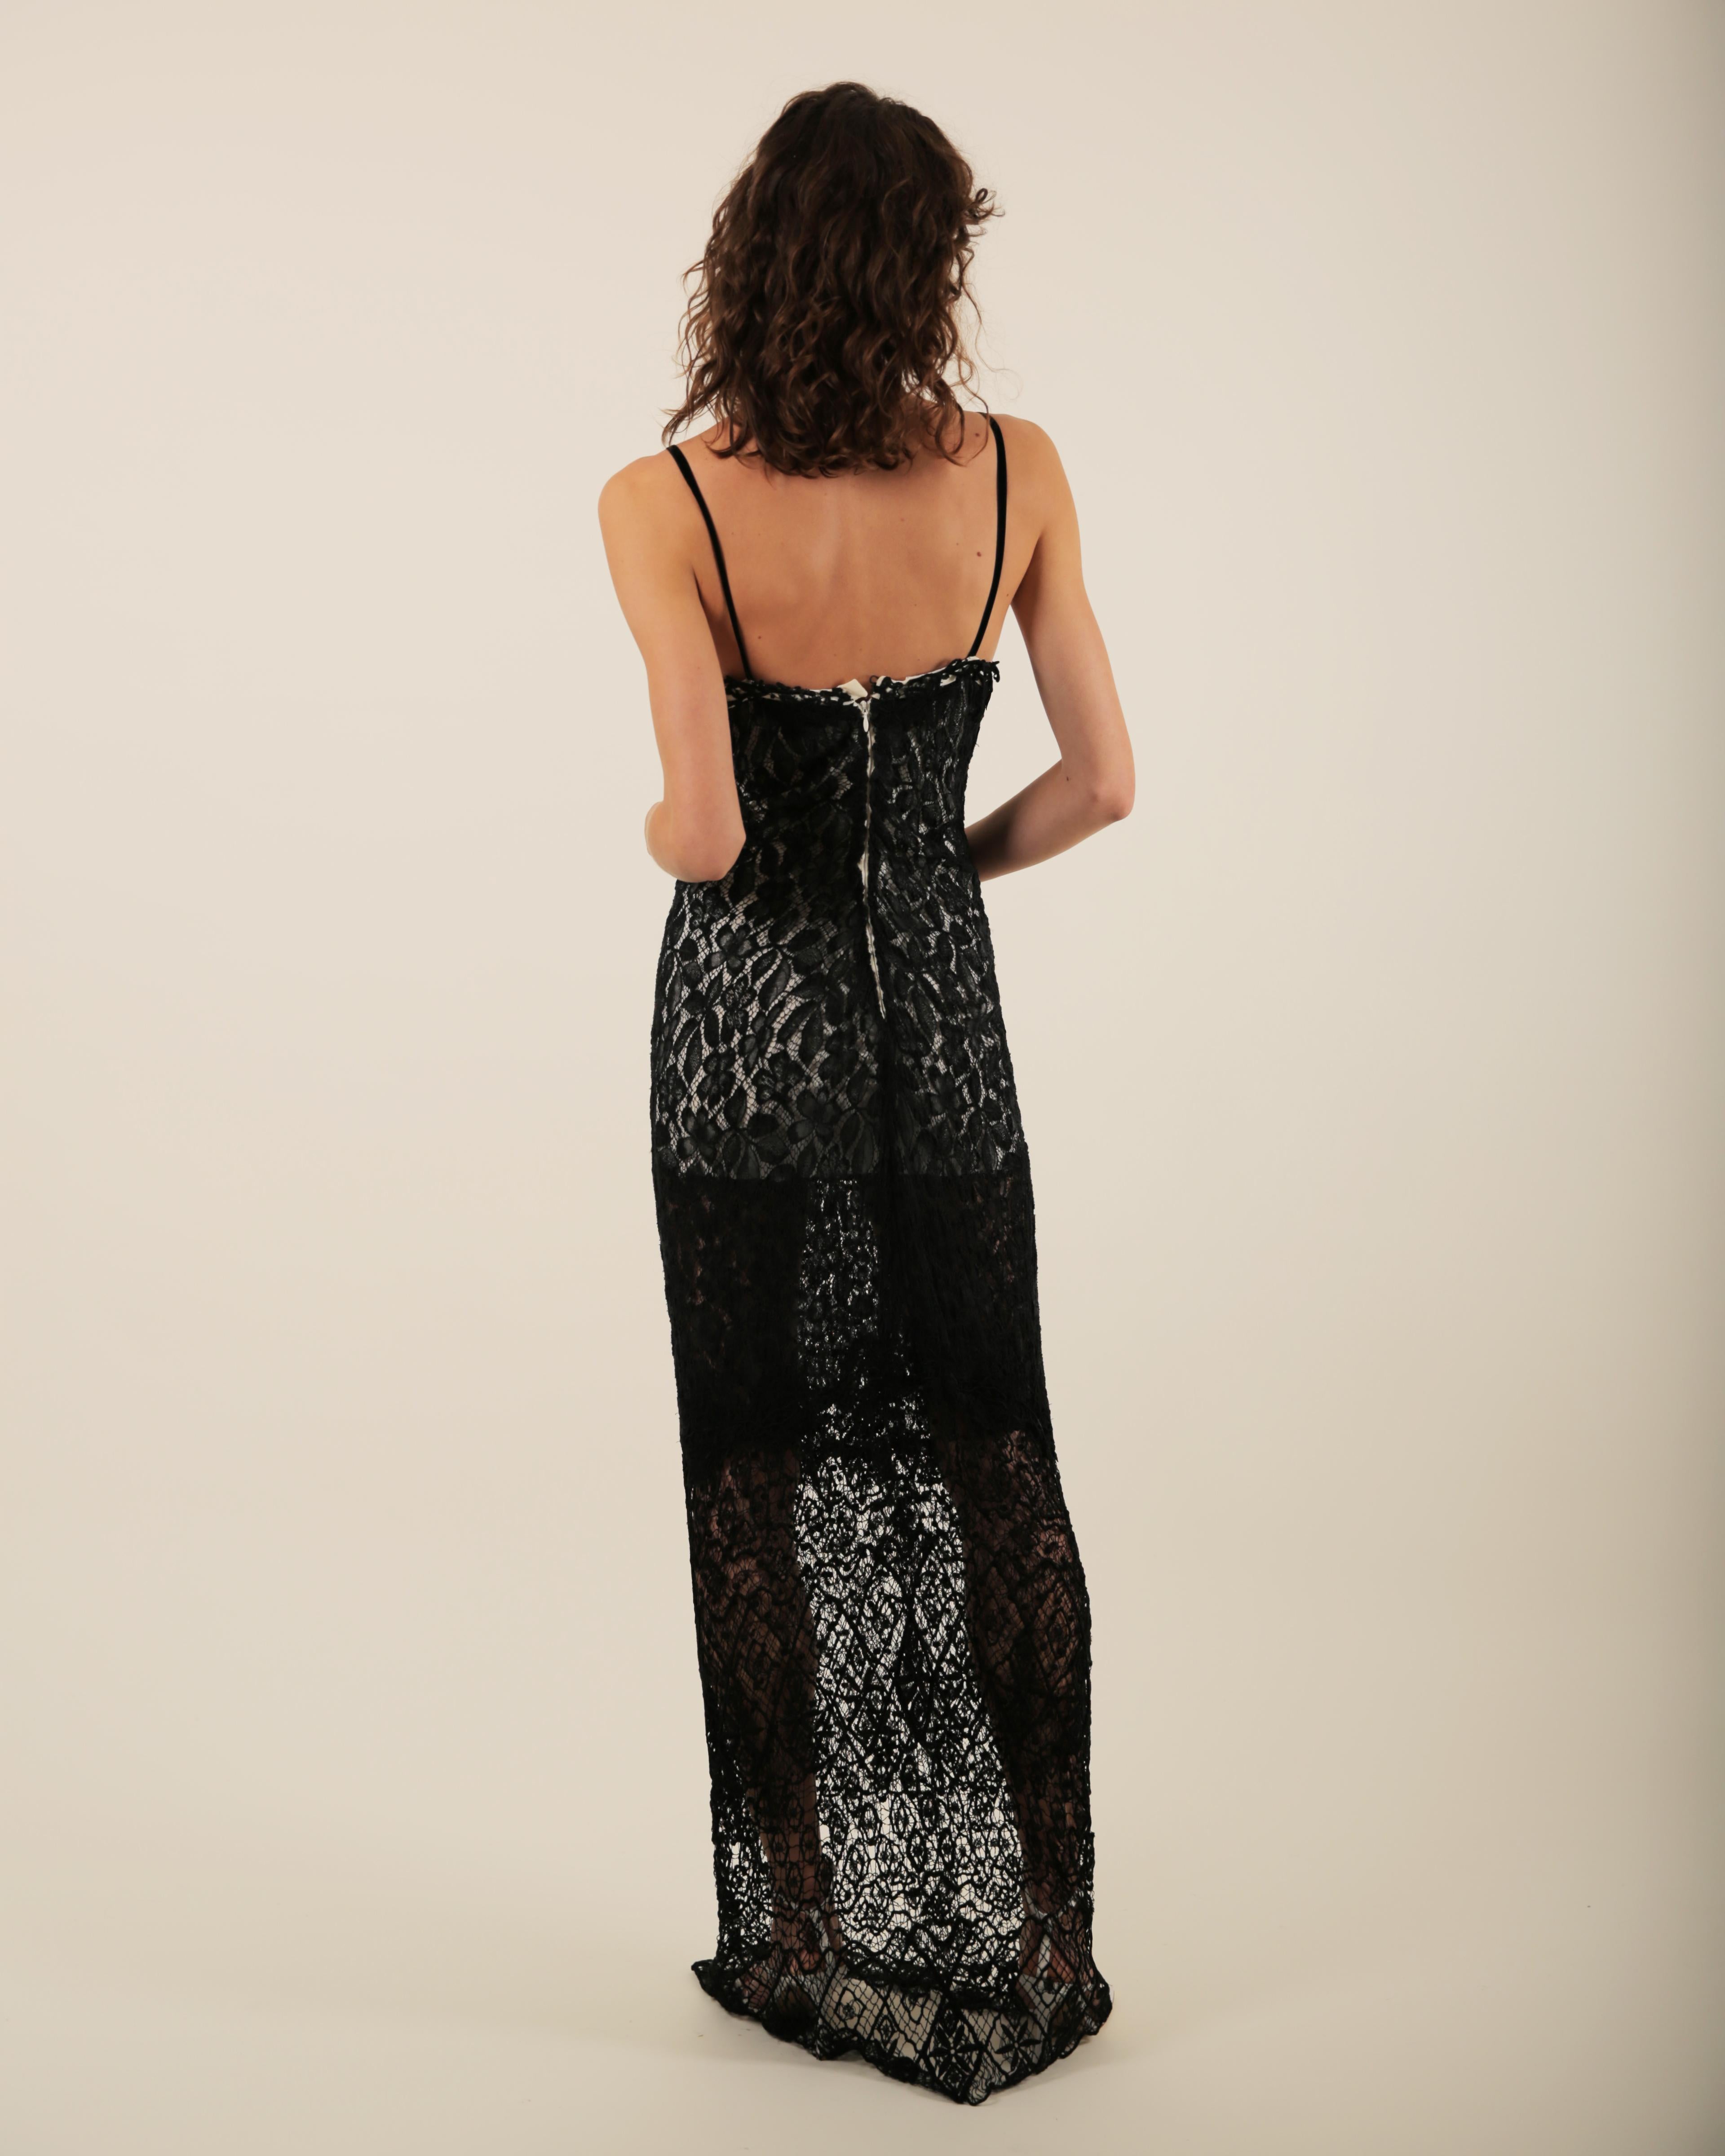 Lolita Lempicka FW 1995 Black white sheer crochet lace overlay bustier dress 40 For Sale 12